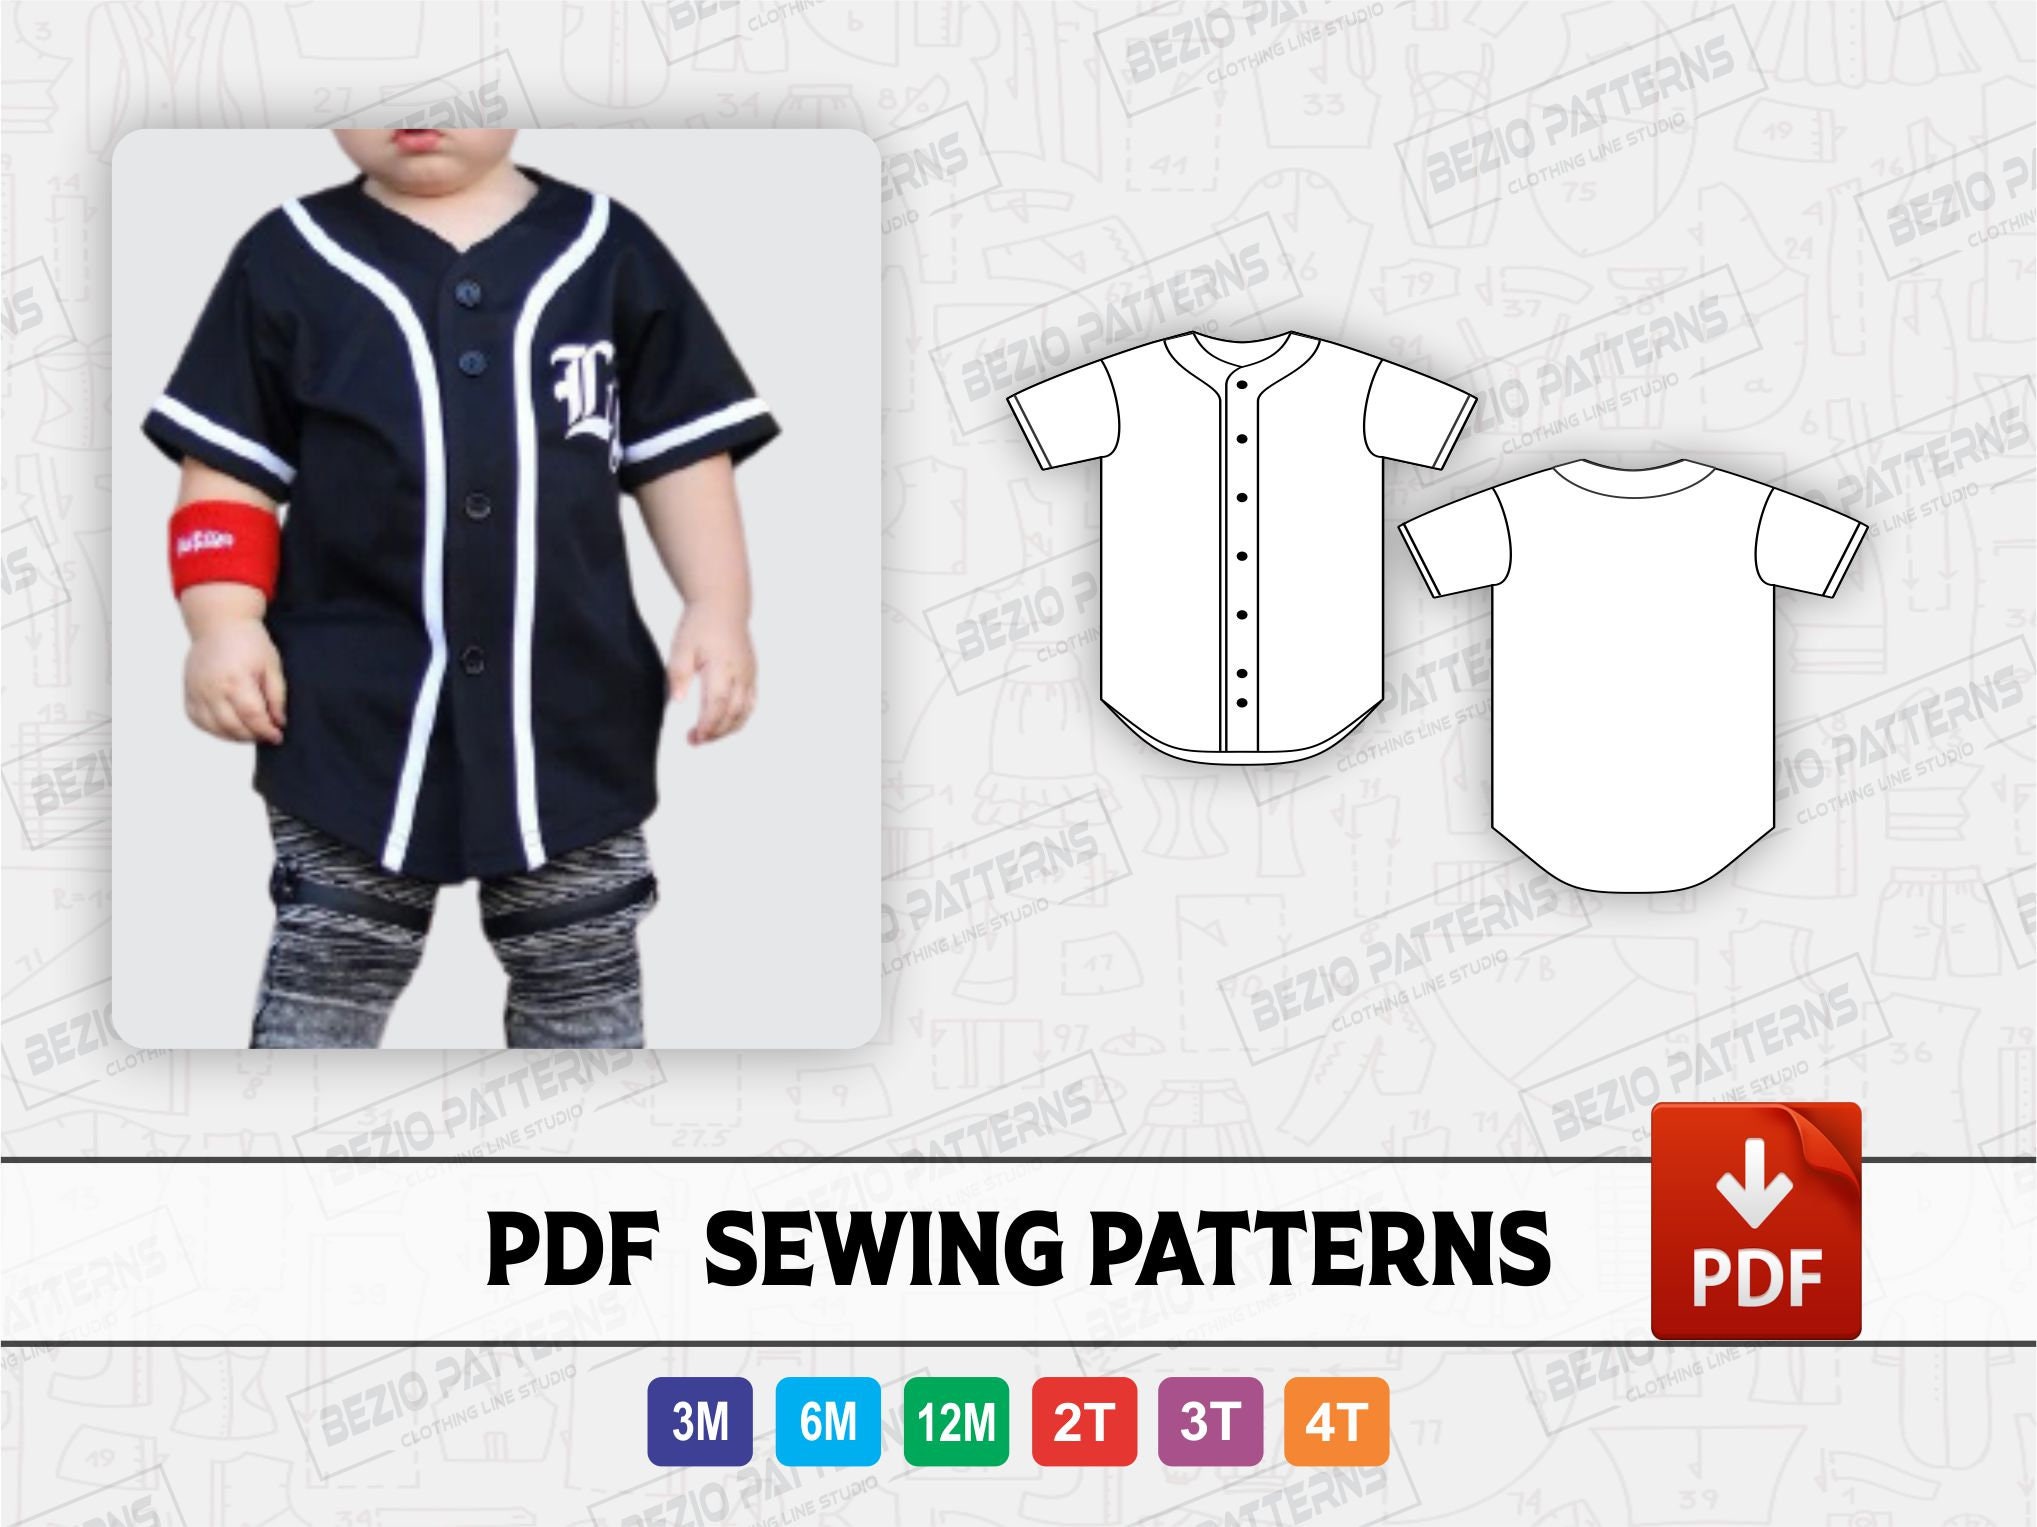 Atlanta Braves Son Goku Baseball Jersey - Custom Design - Scesy